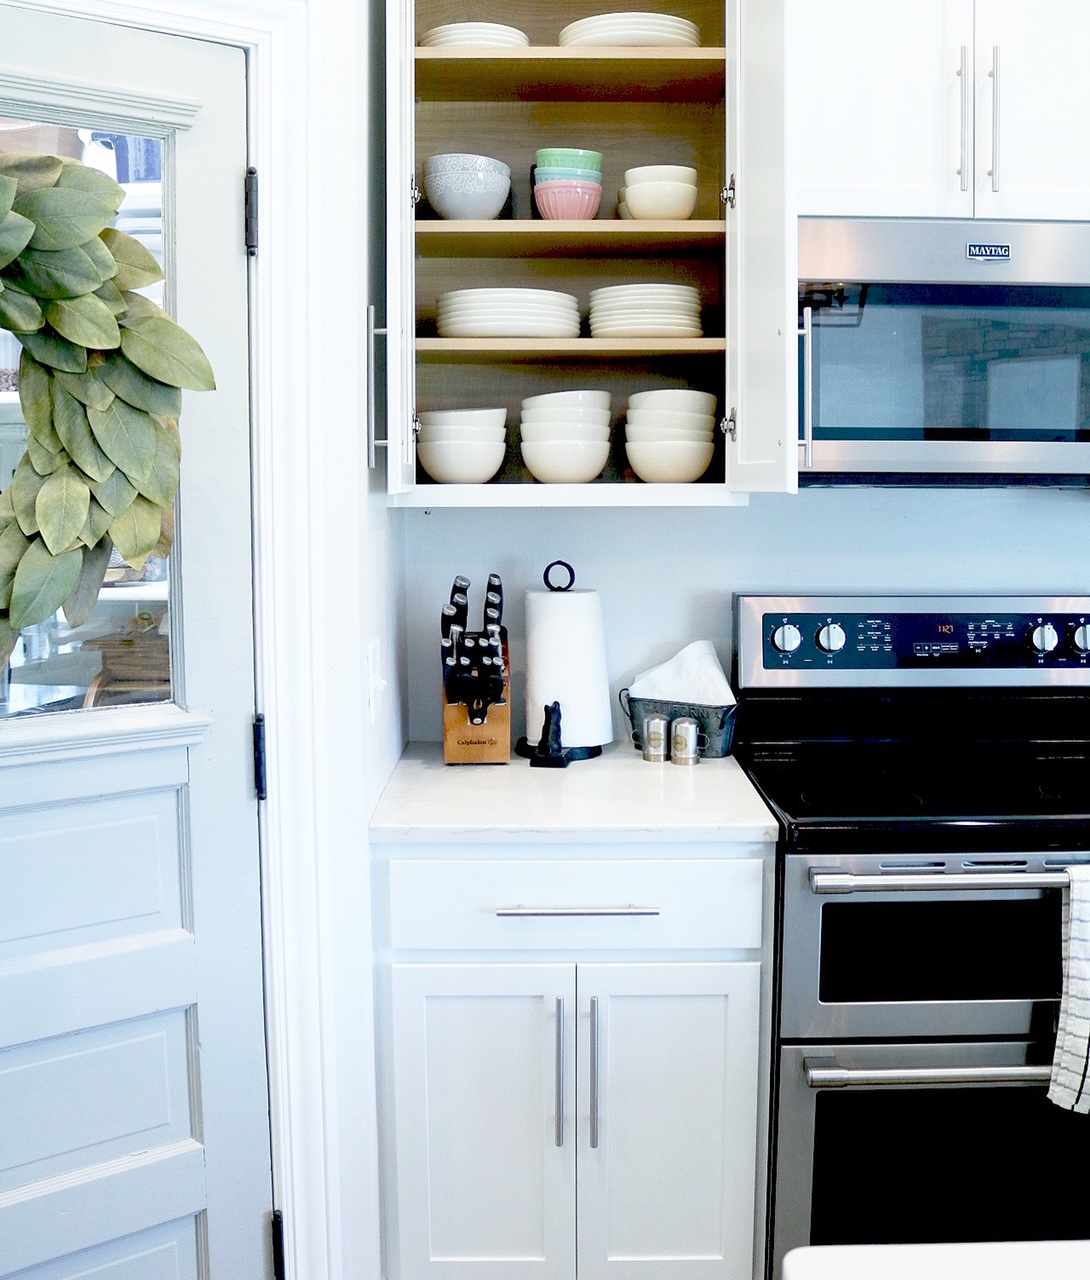 3 Reasons to Tidy Your Home Like Marie Kondo - Organized Kitchen - Marie Kondo Tidying Up Review #organization #mariekondomethod #mariekondo #organizedkitchen #whitekitchen #whitedishes #magnolia